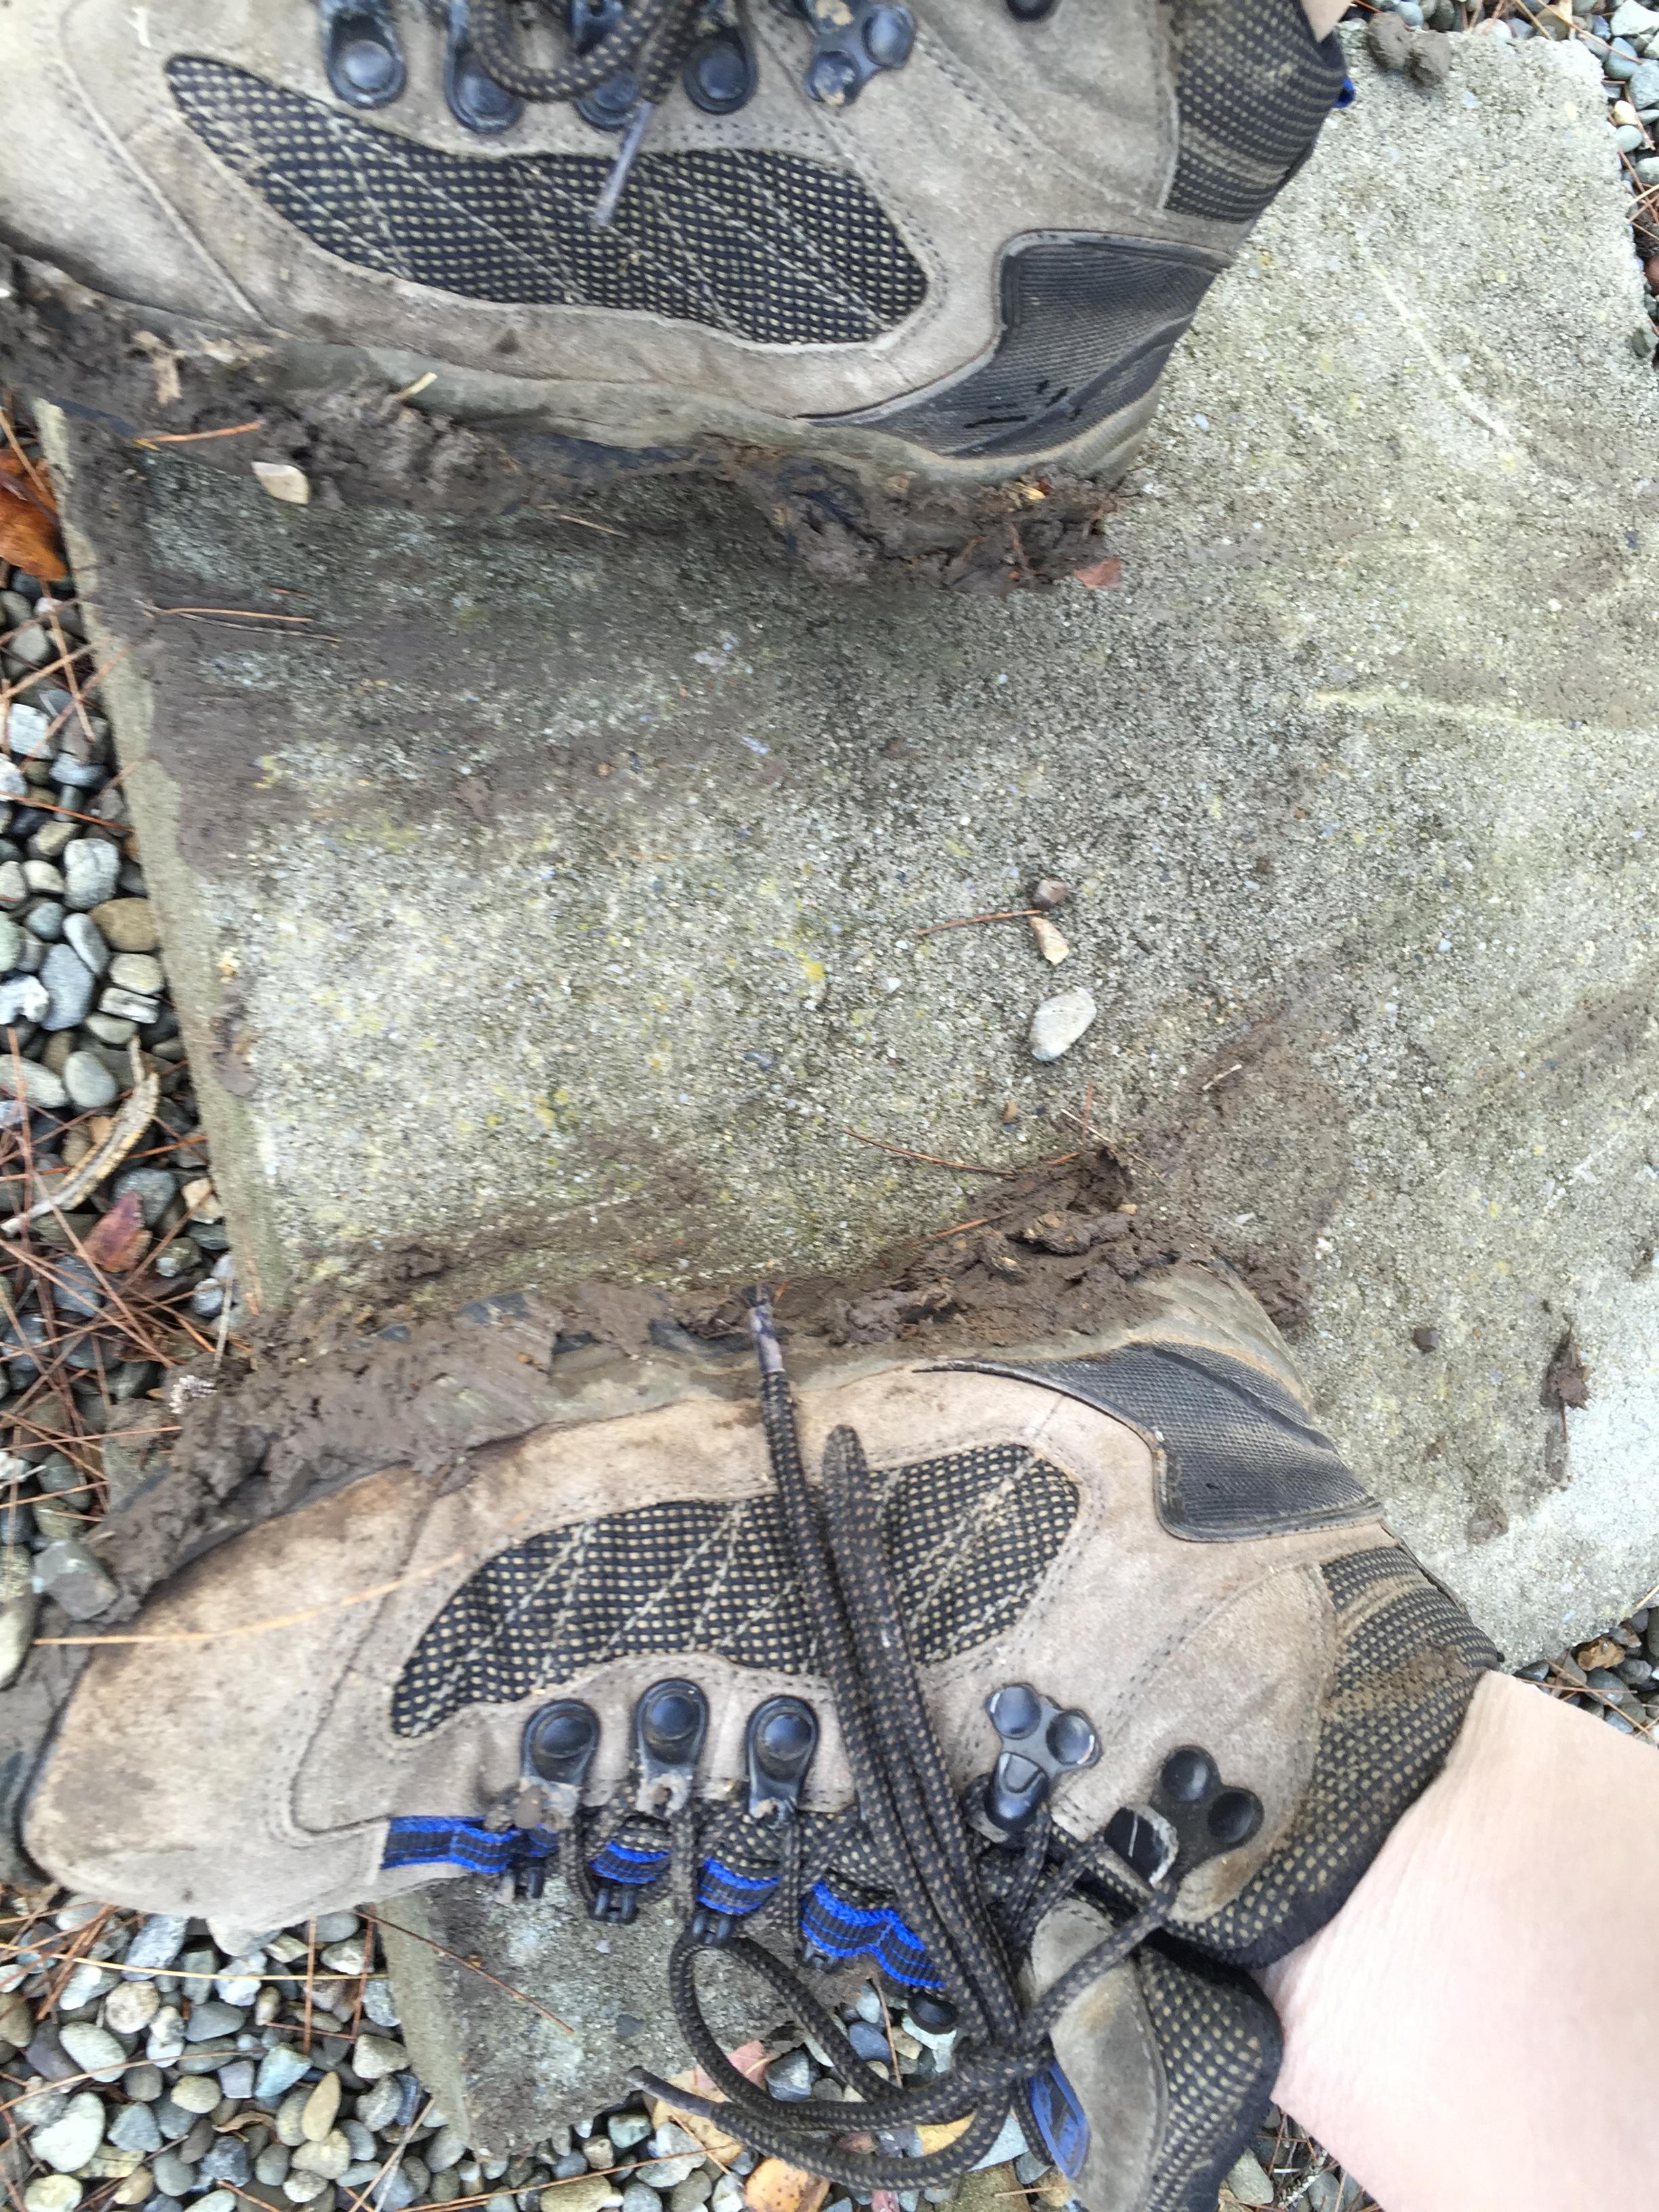 Muddy boots